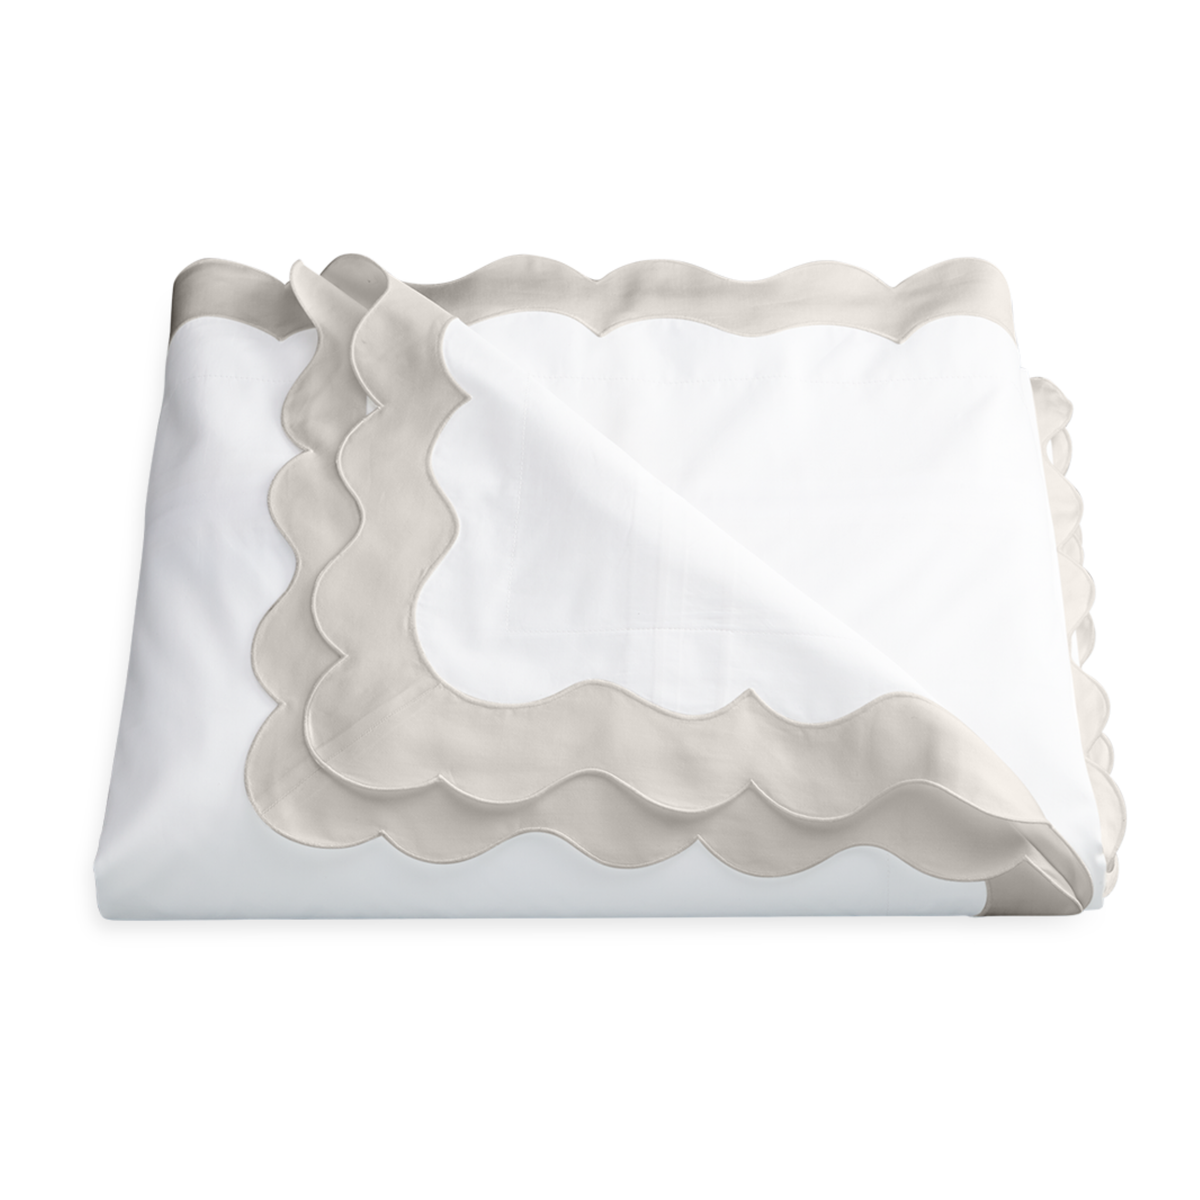 Folded Duvet Cover of Matouk Lorelei Bedding in Silver Color